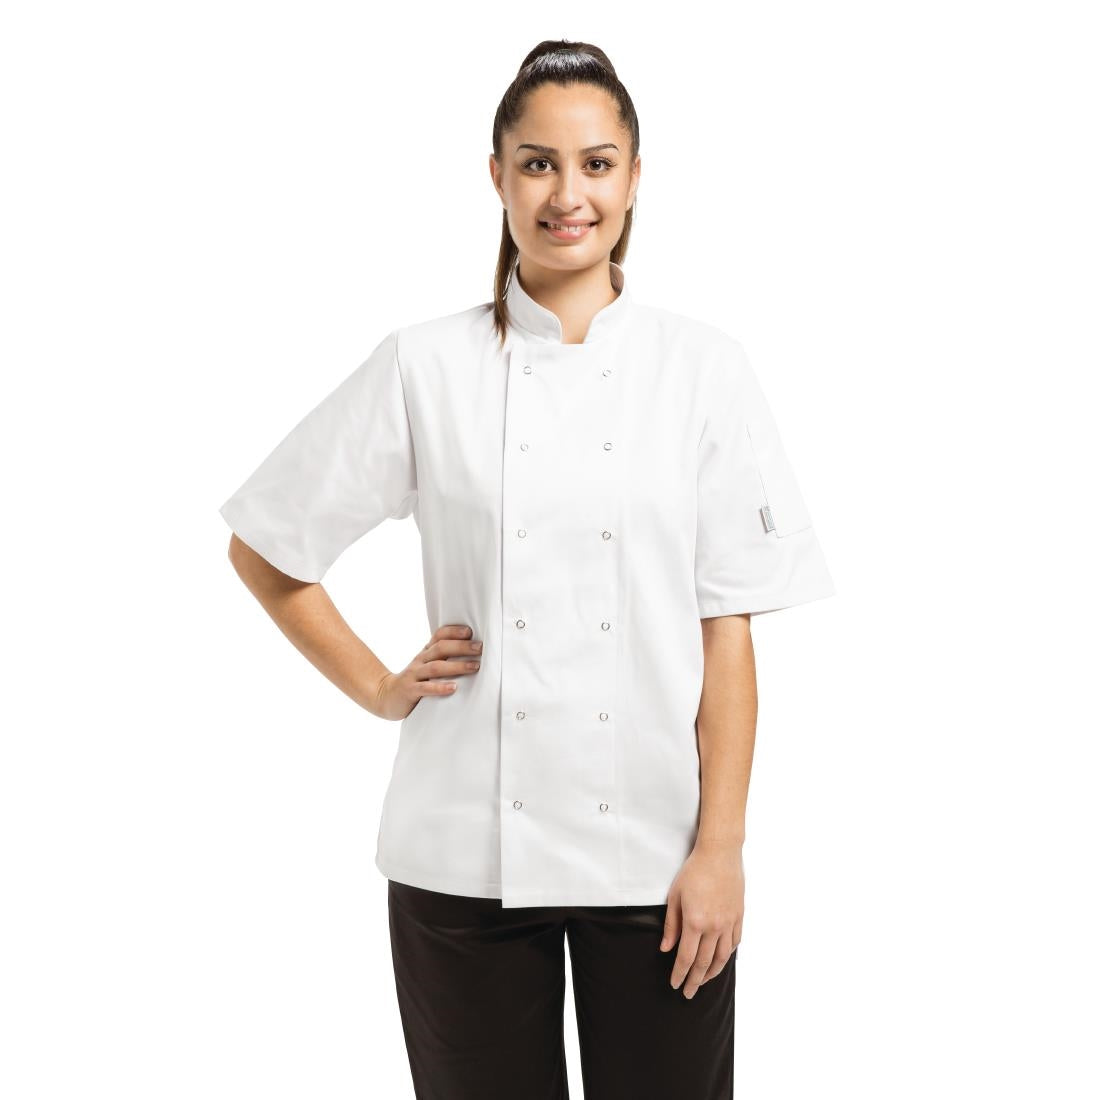 A211-L Whites Vegas Unisex Chefs Jacket Short Sleeve White L JD Catering Equipment Solutions Ltd